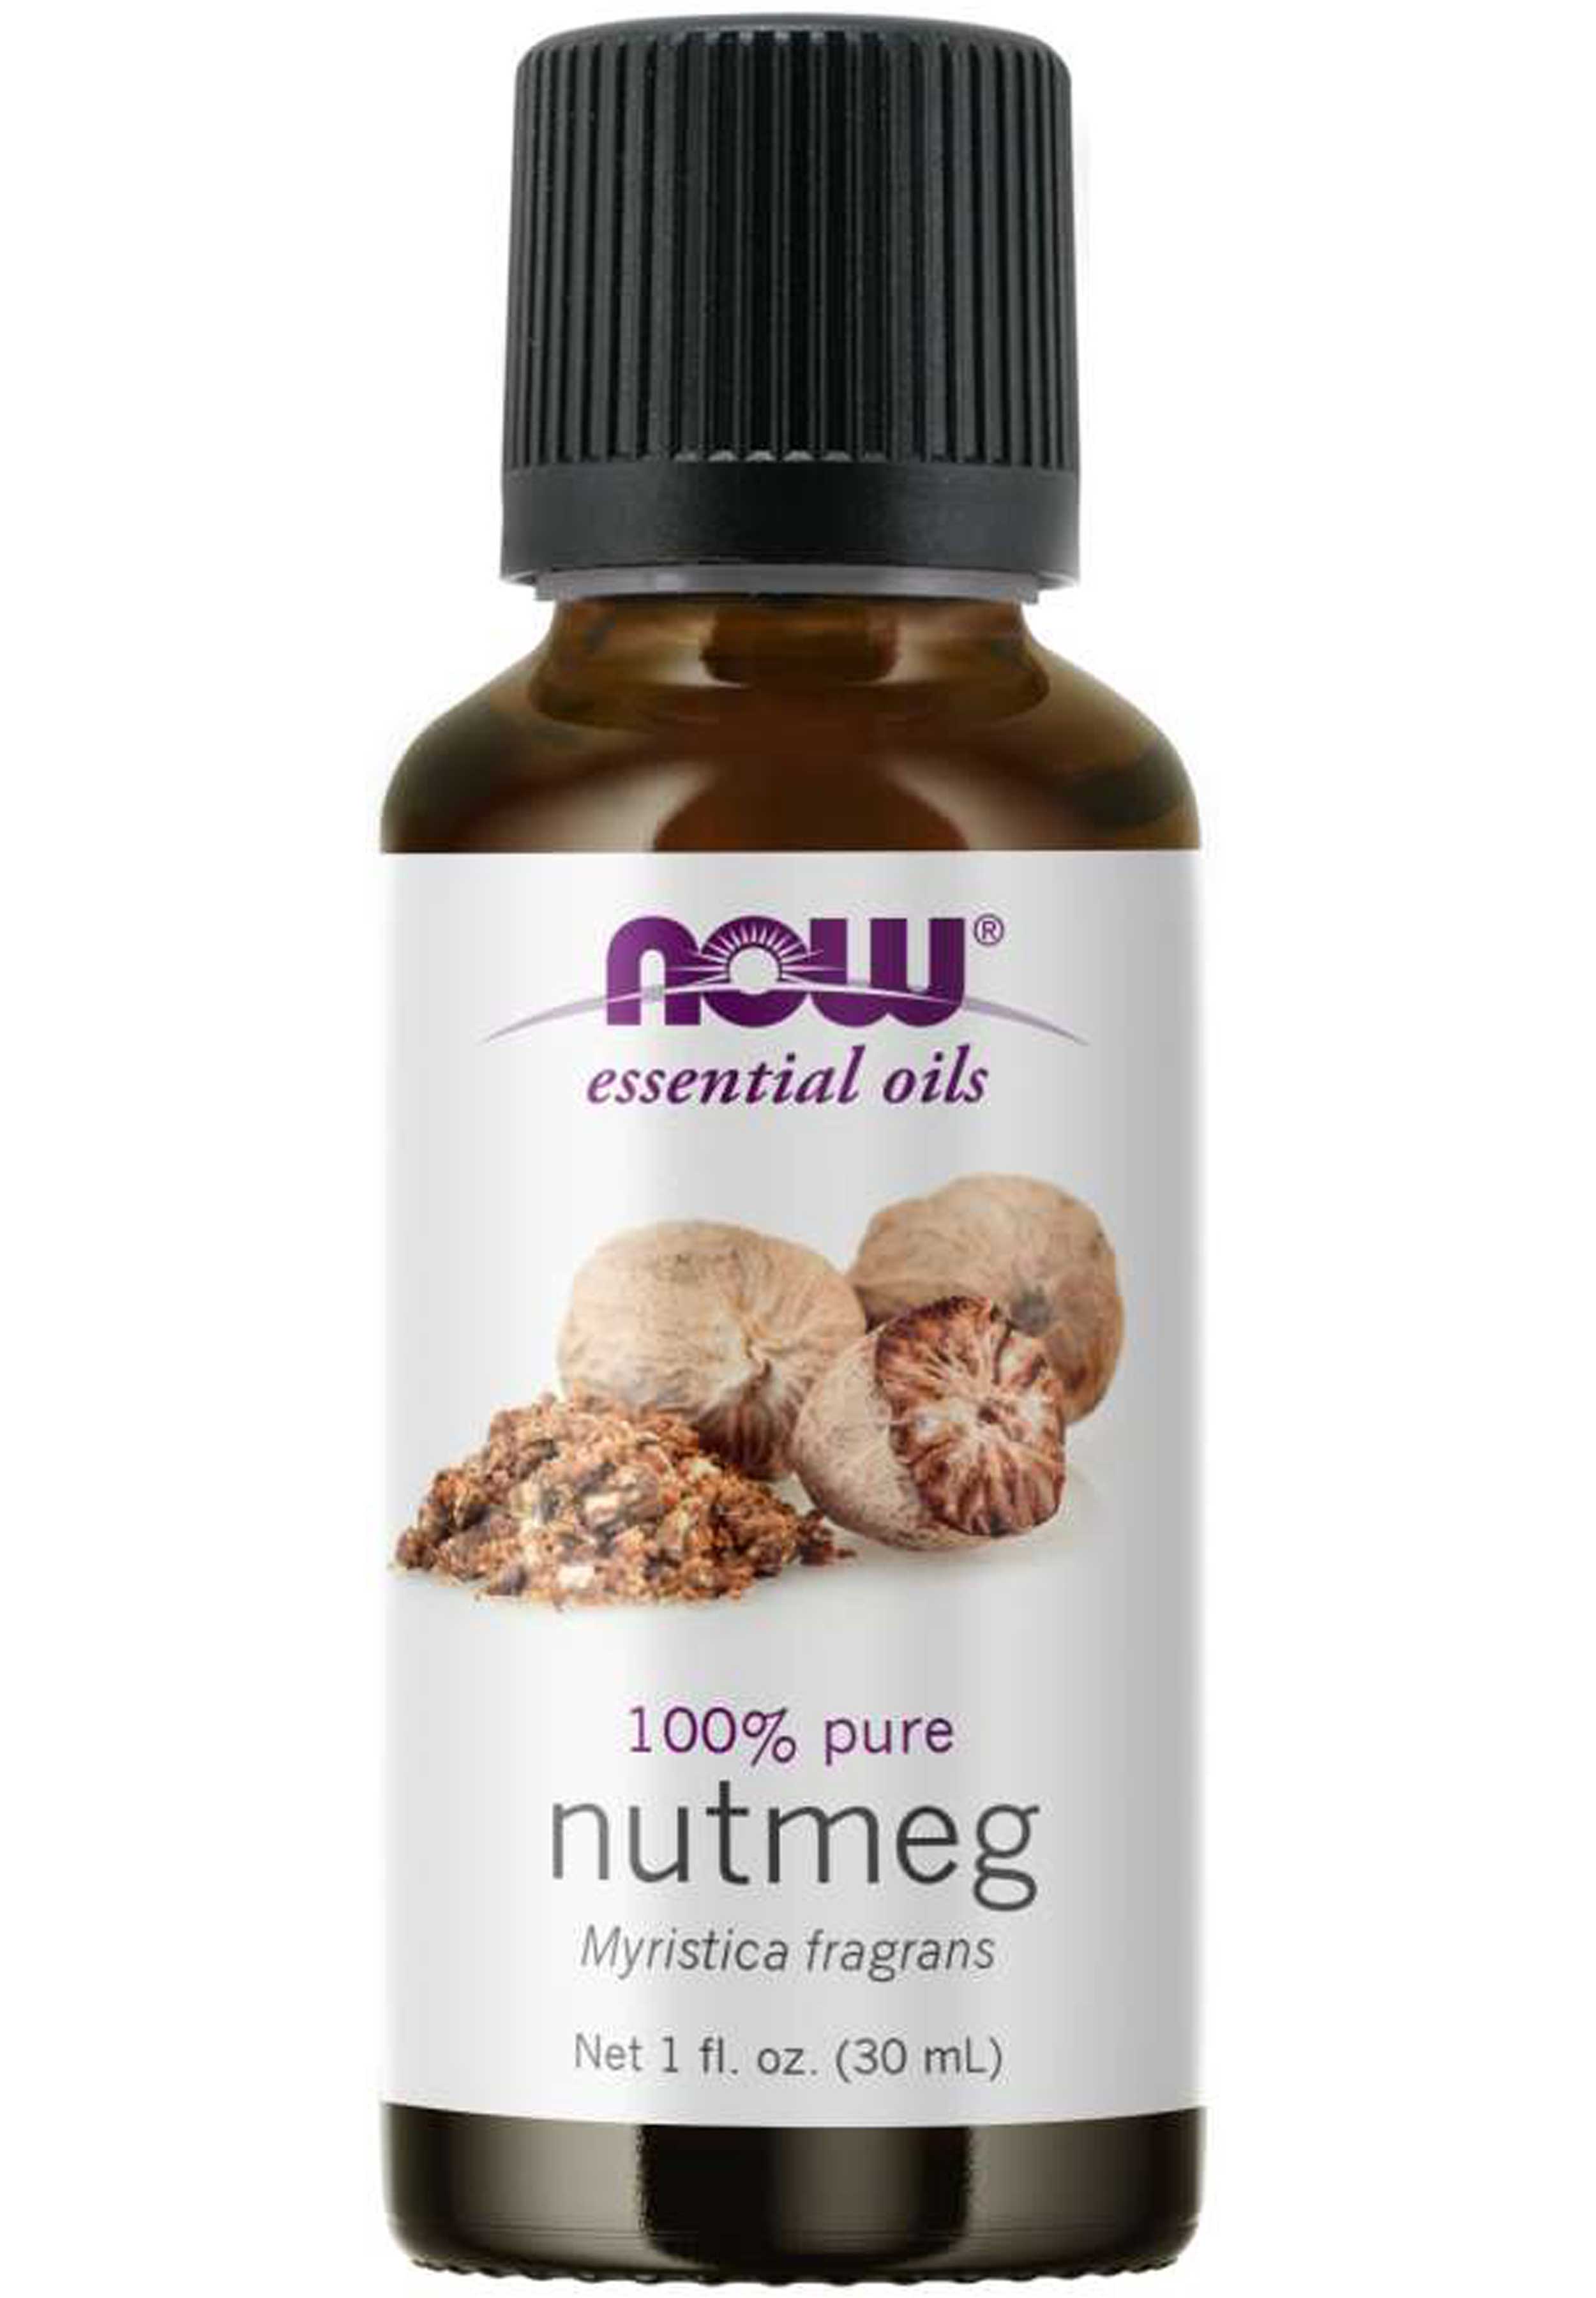 NOW Essential Oils Nutmeg Oil, Pure